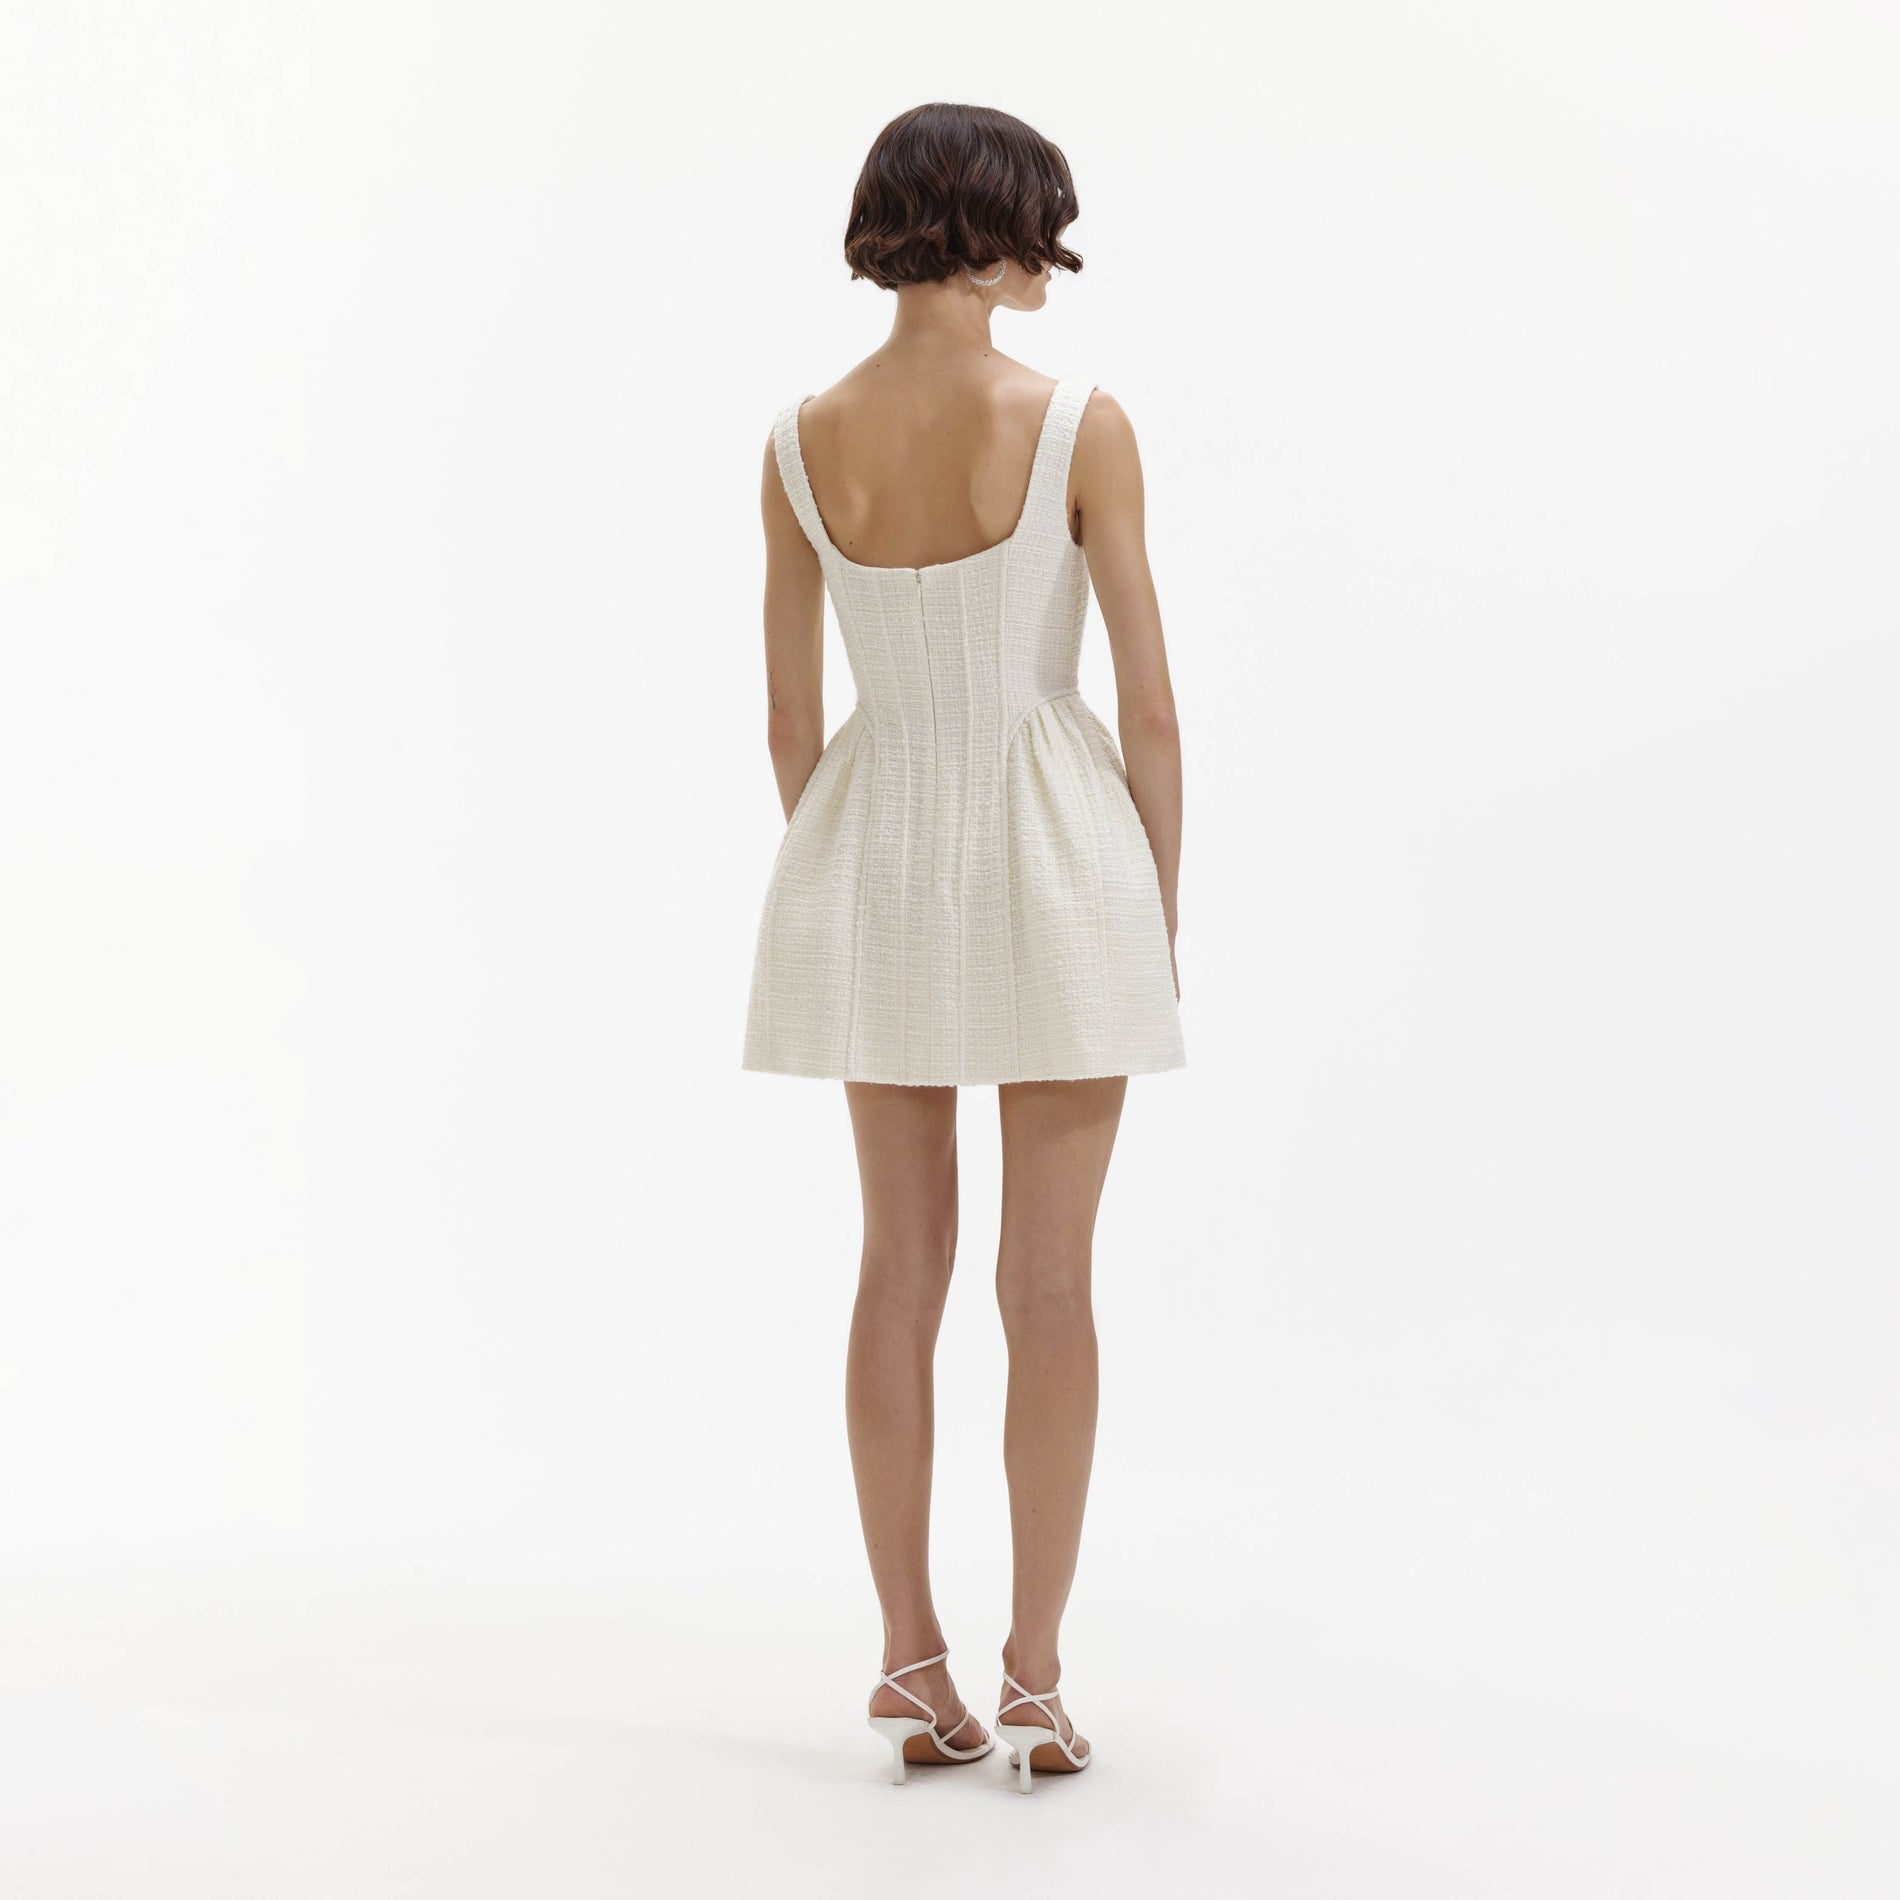 A Woman wearing the Cream Boucle Mini Dress